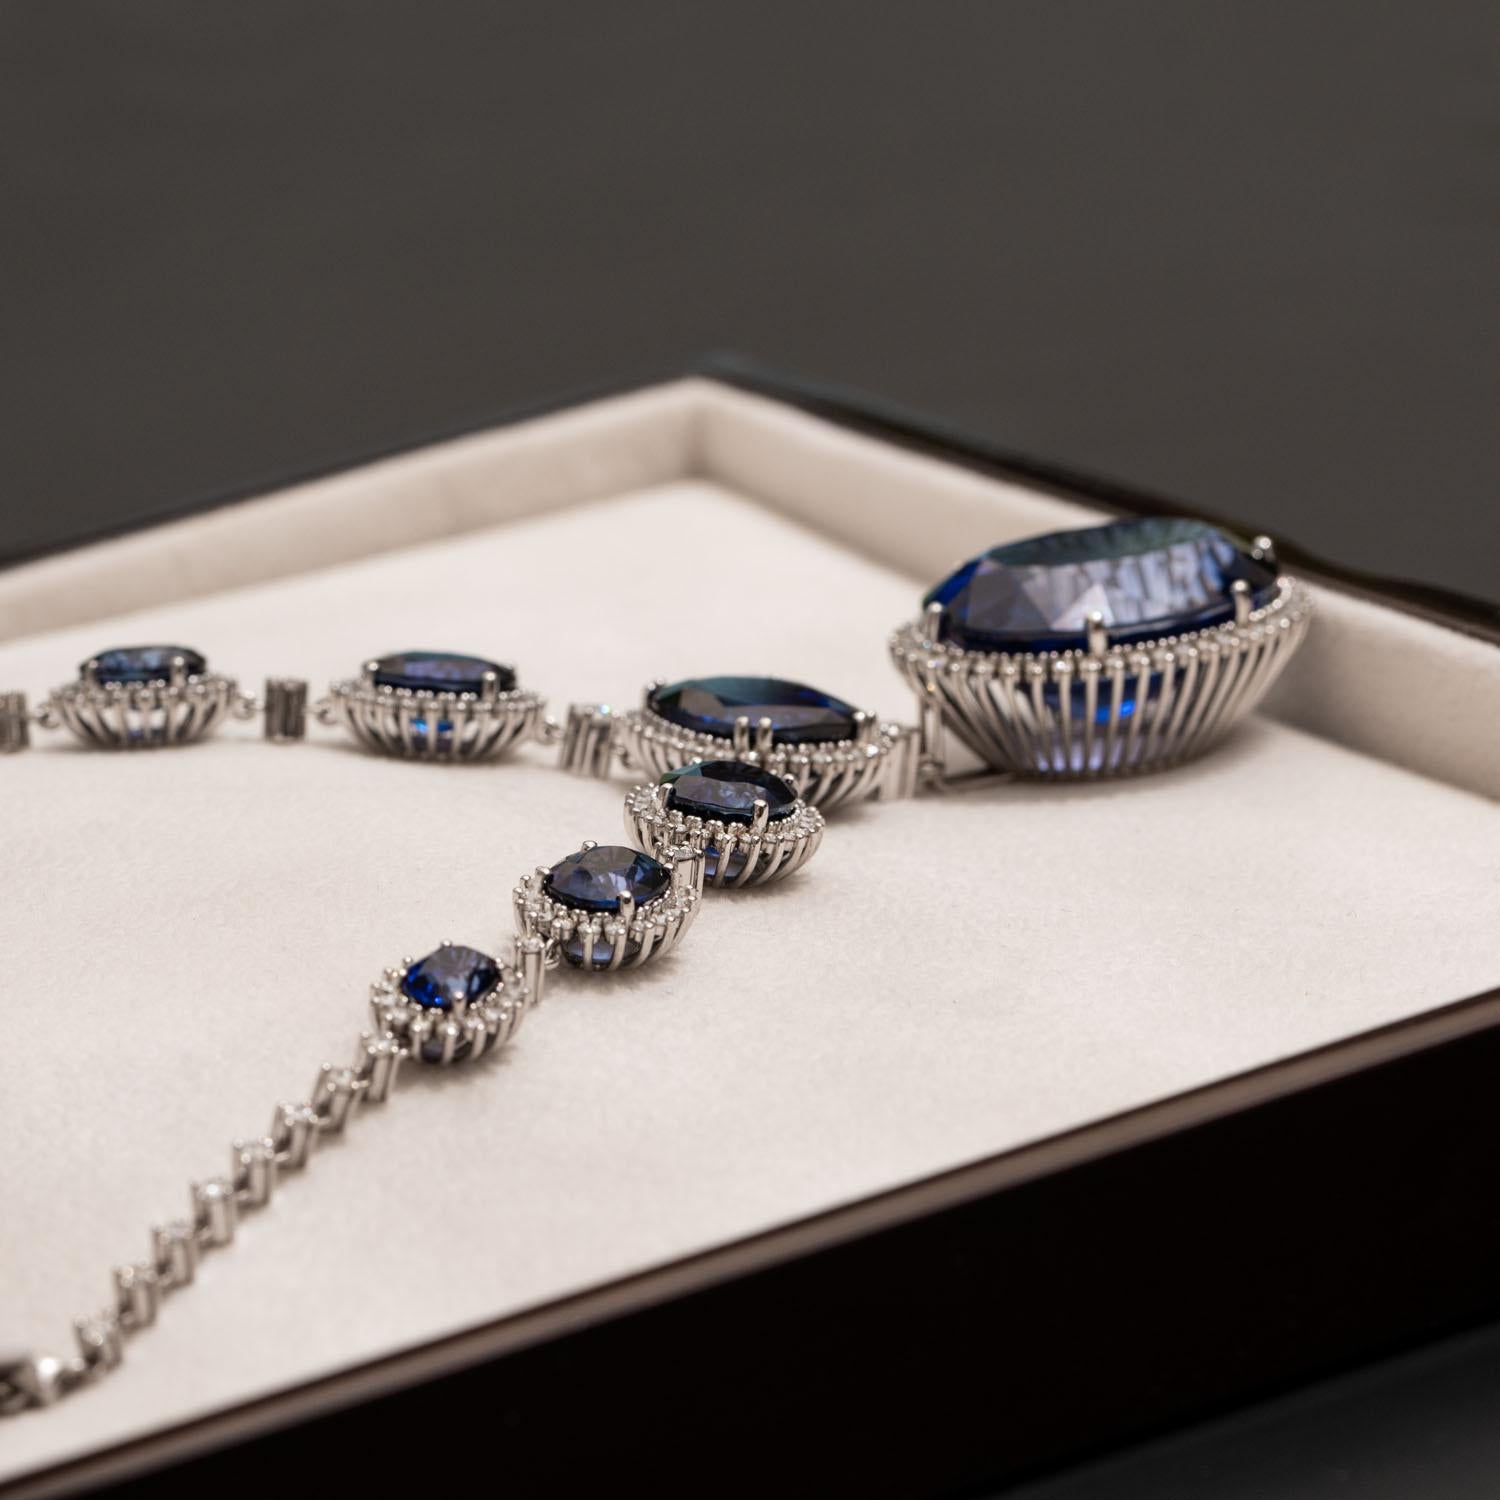 sapphire statement necklace